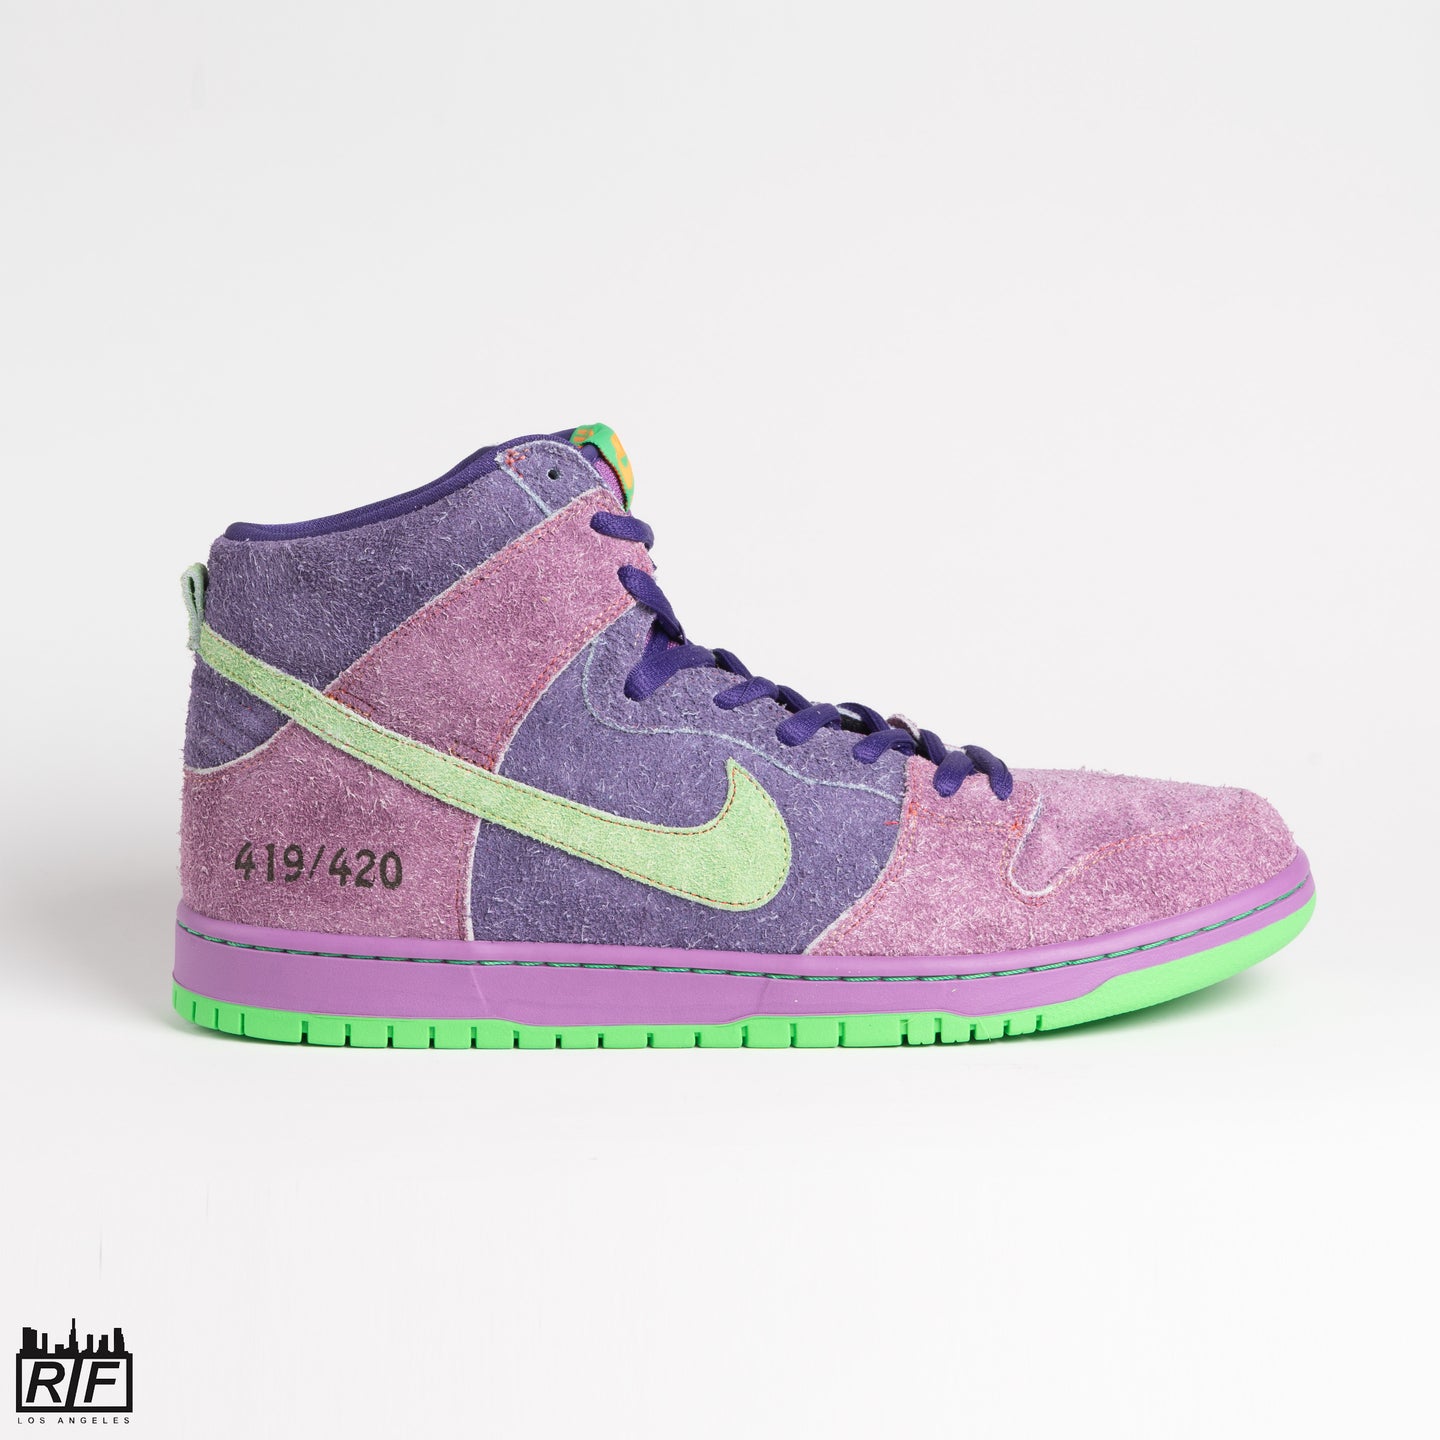 Nike Air Max 98 Purple NI